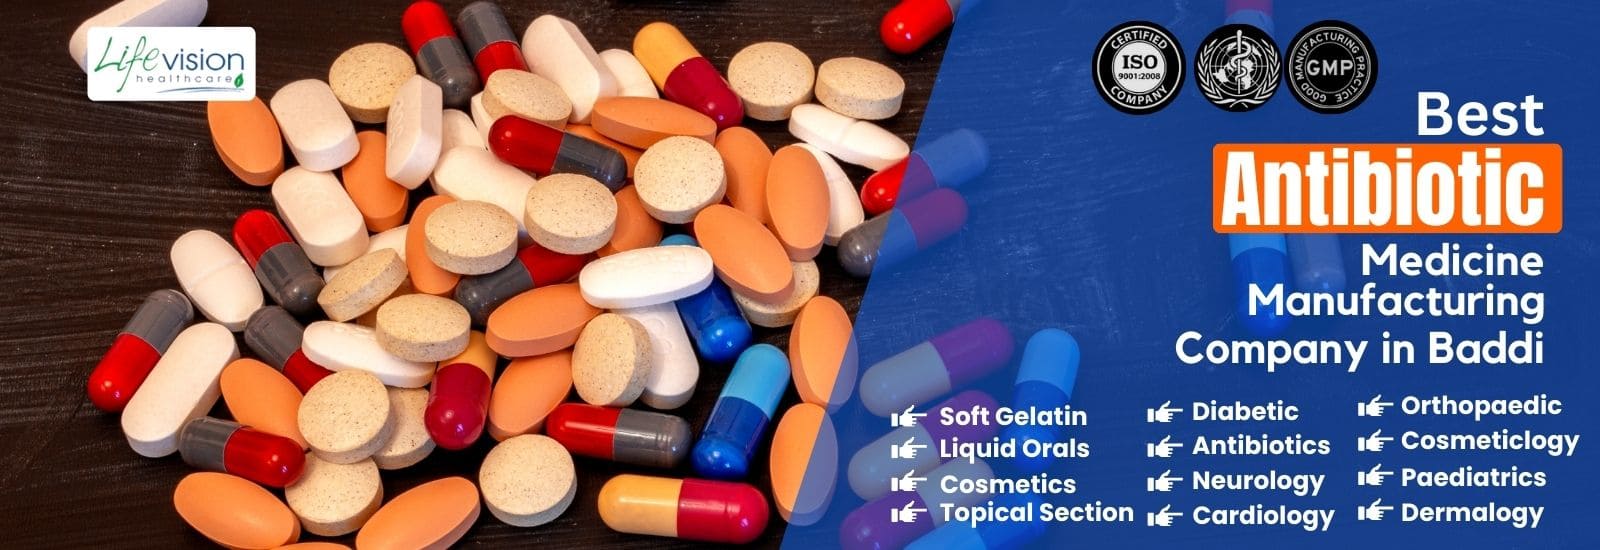 antibiotic medicine manufacturing company baddi